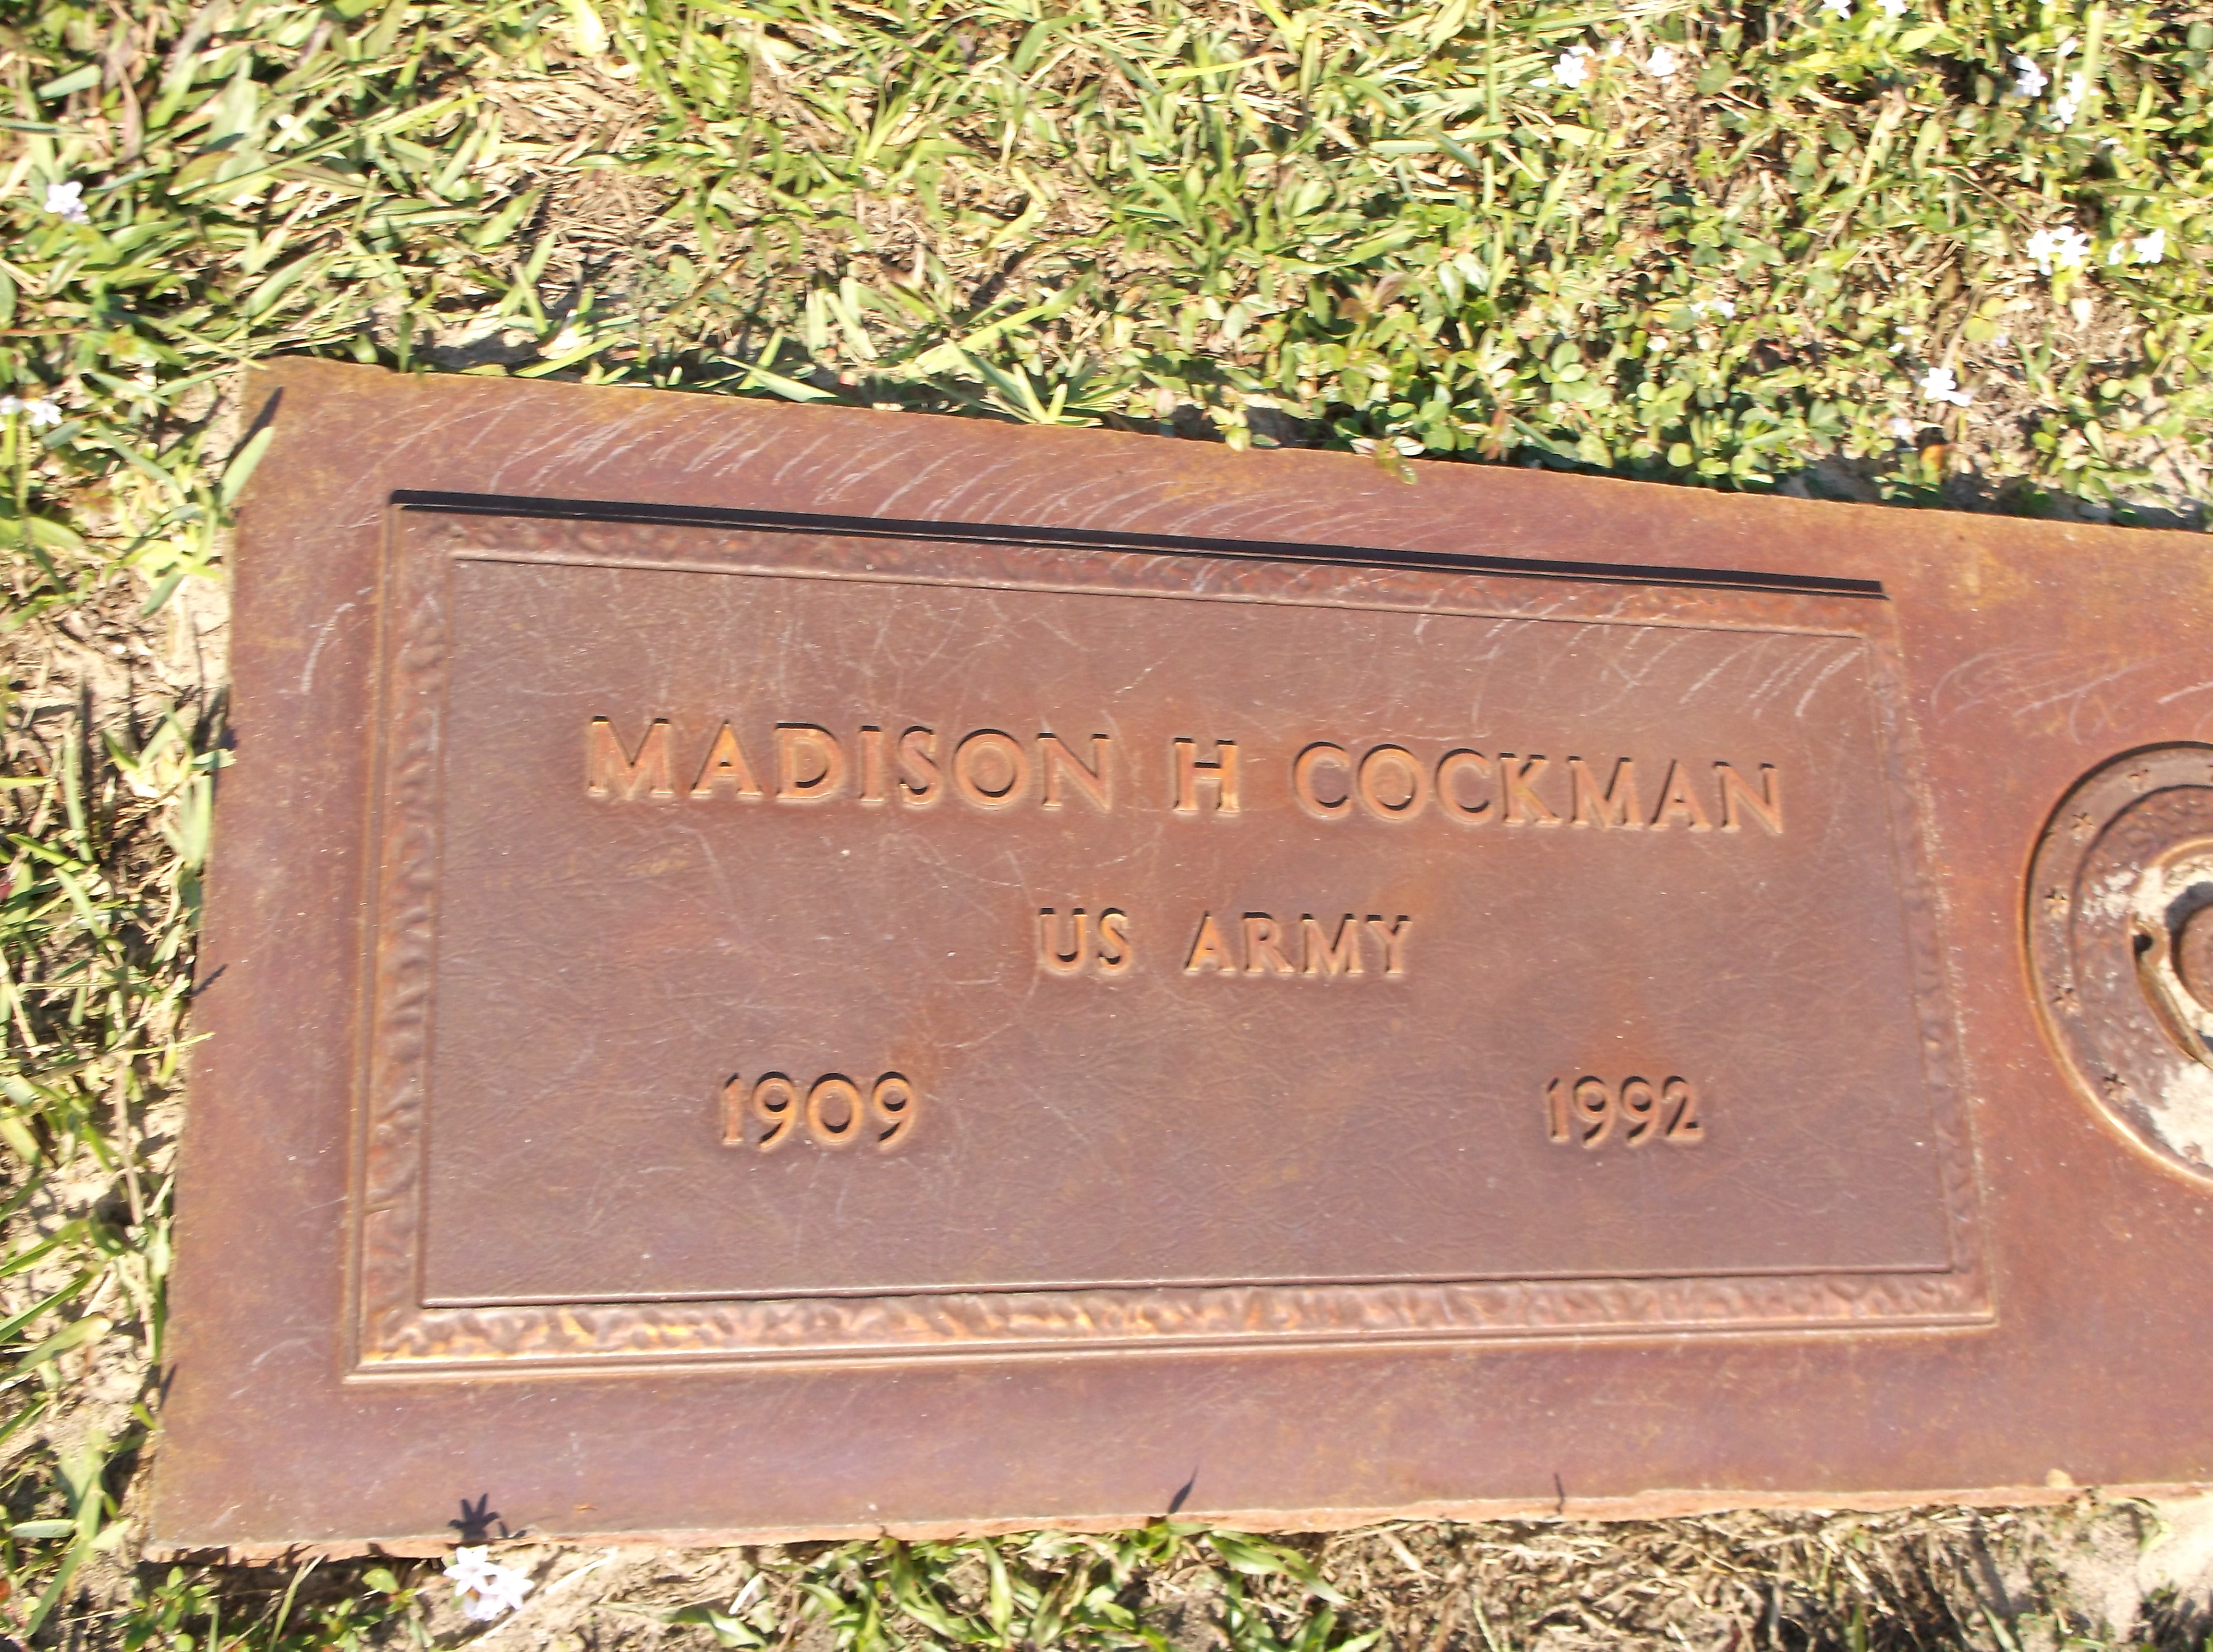 Madison H Cockman